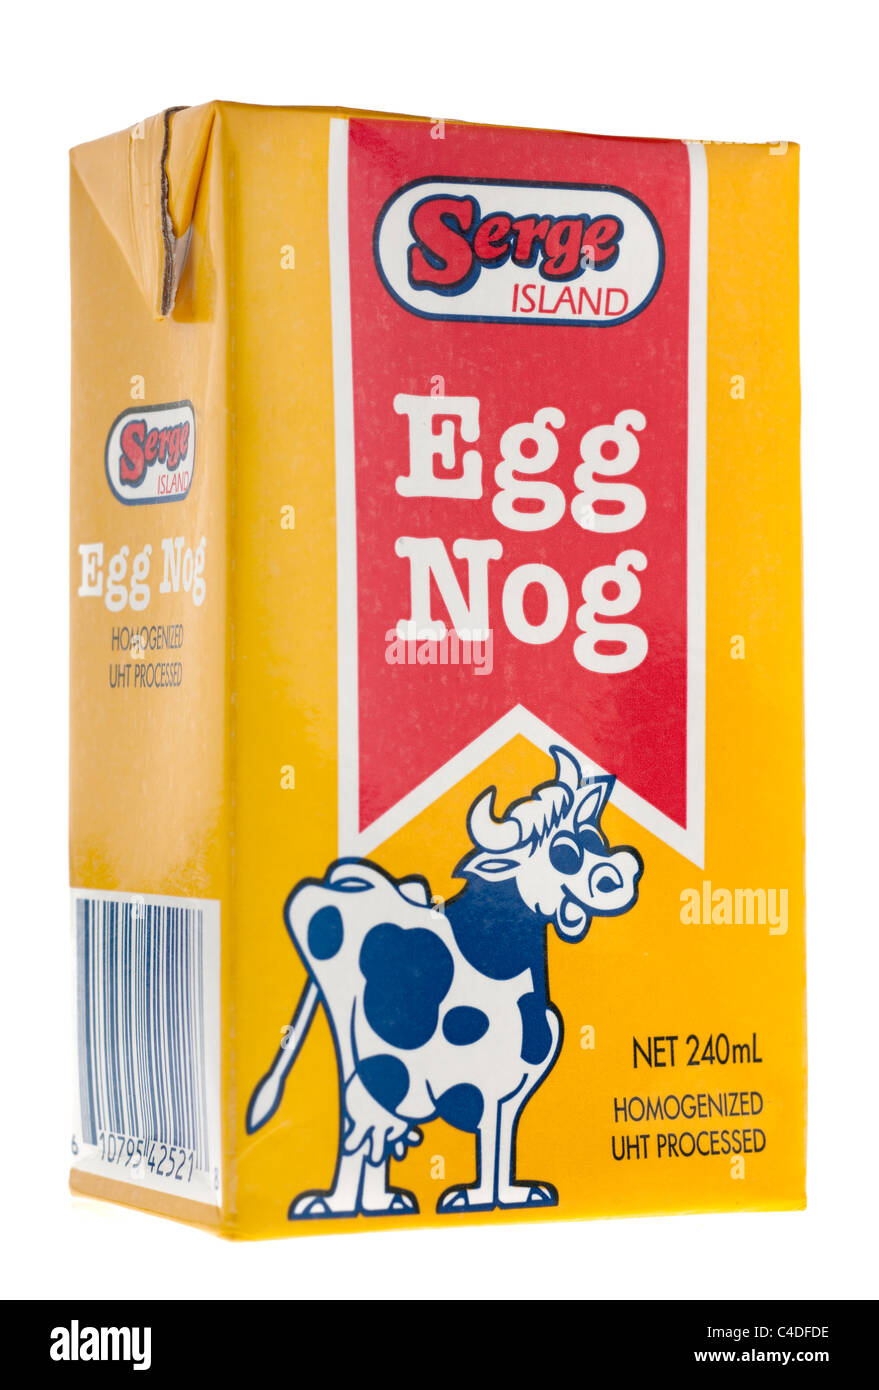 240ml carton of Serge Island Egg Nog Stock Photo - Alamy